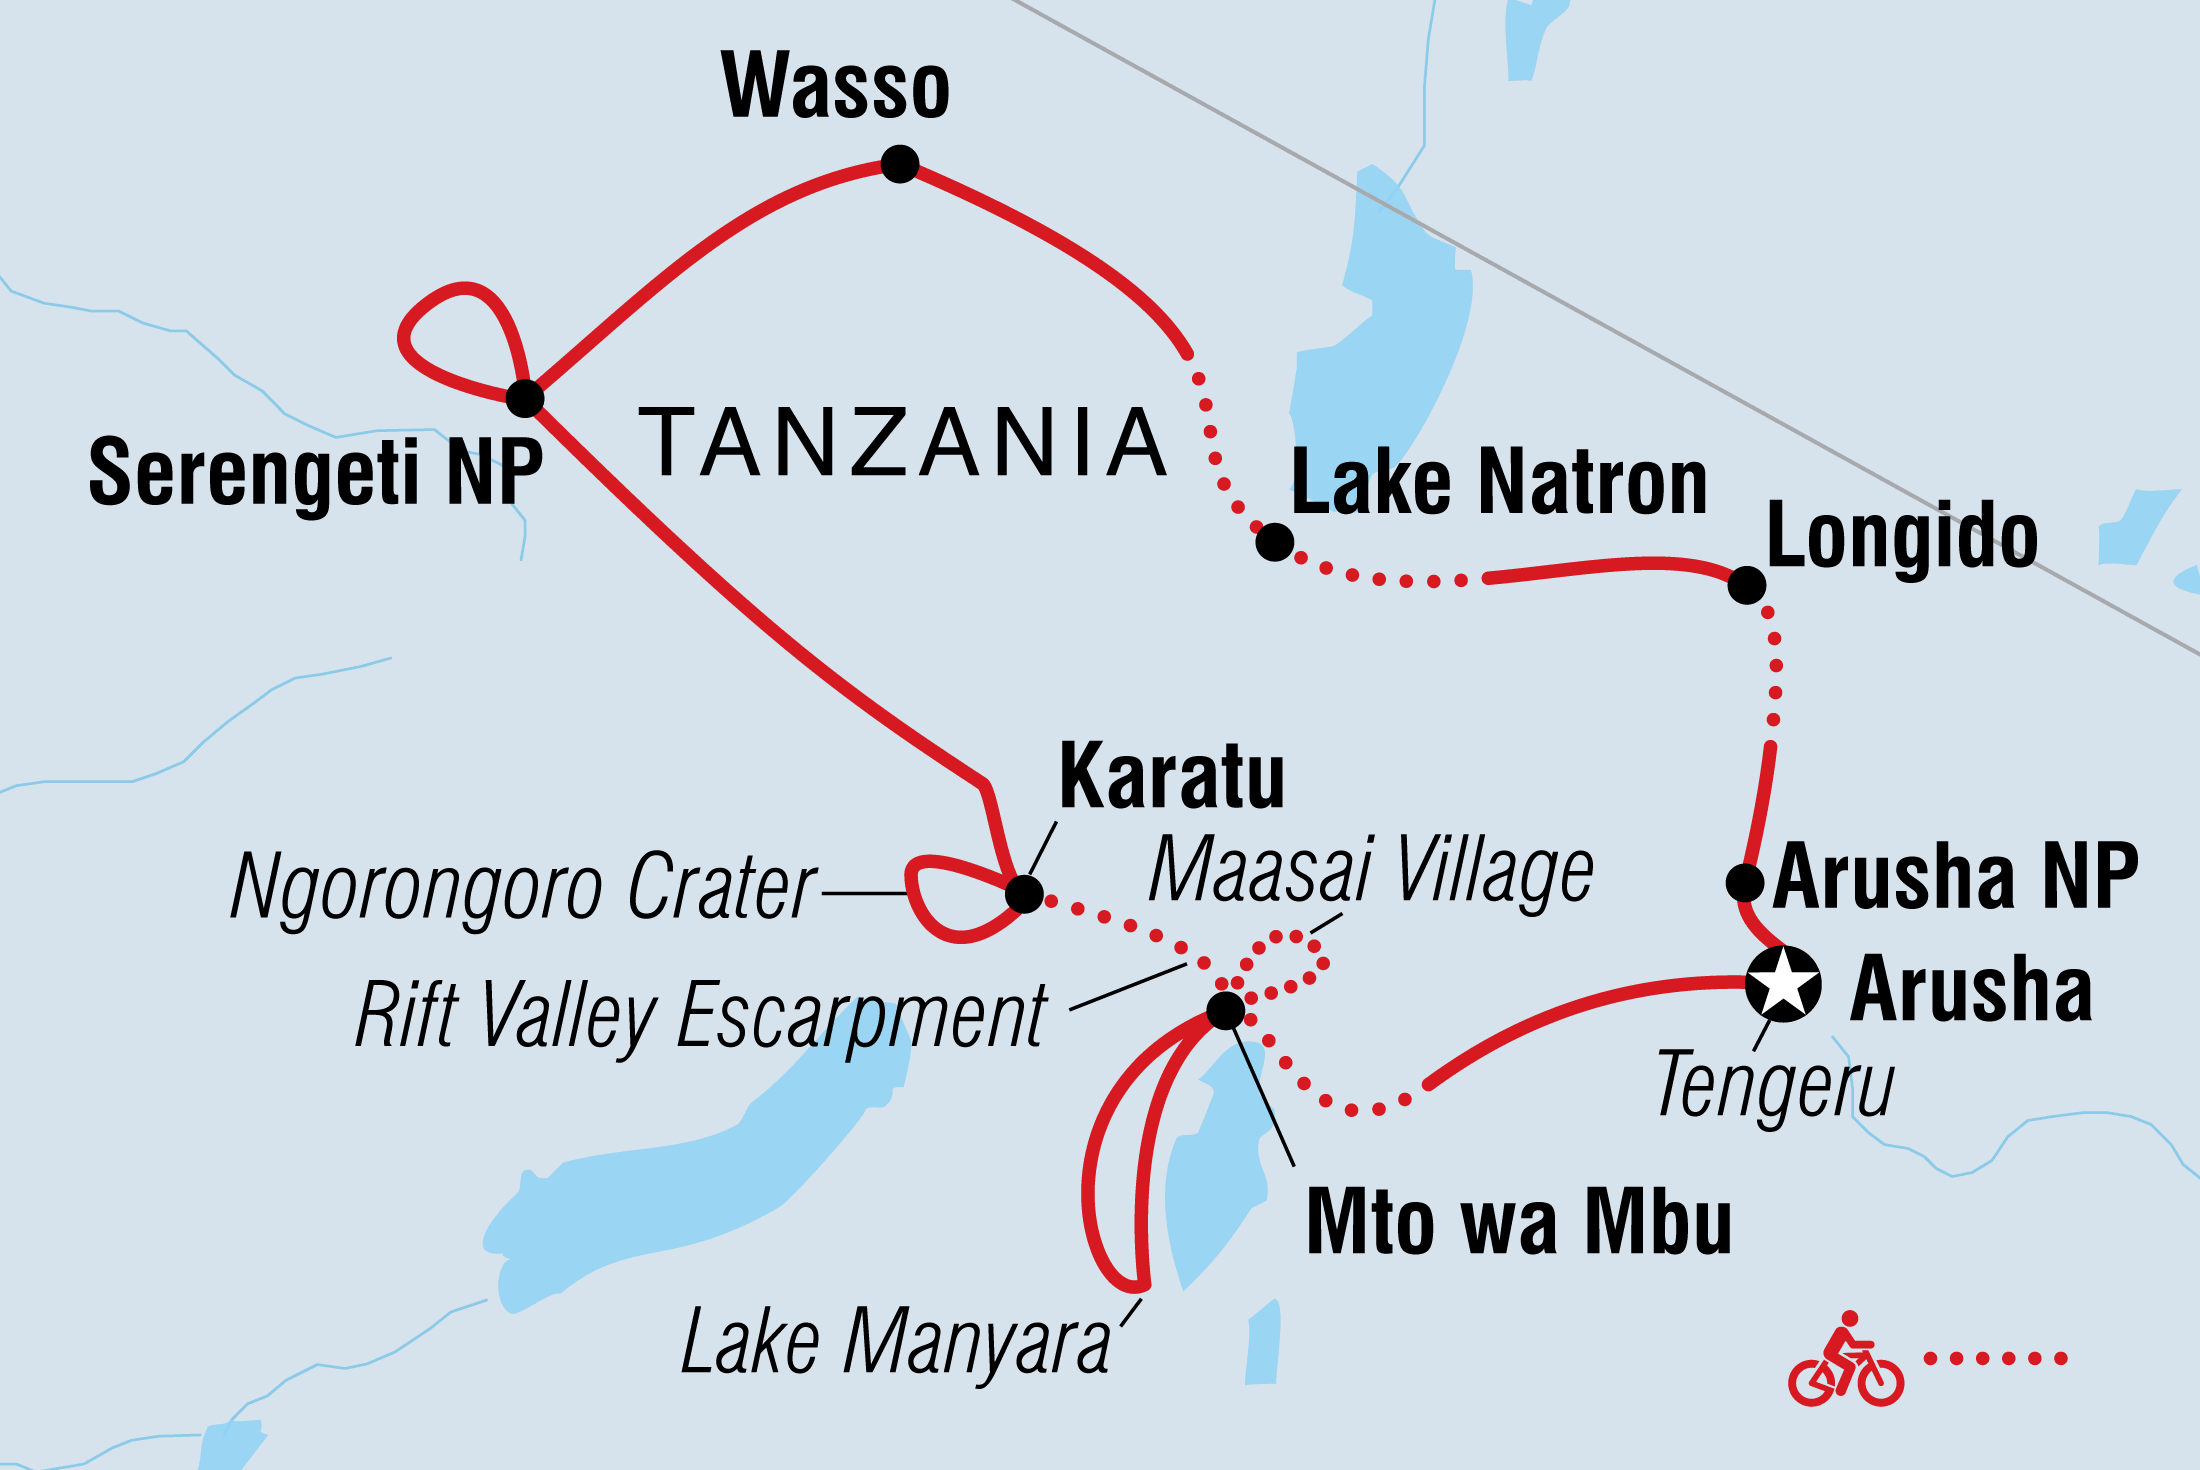 Map of Cycle Tanzania including Tanzania, United Republic Of